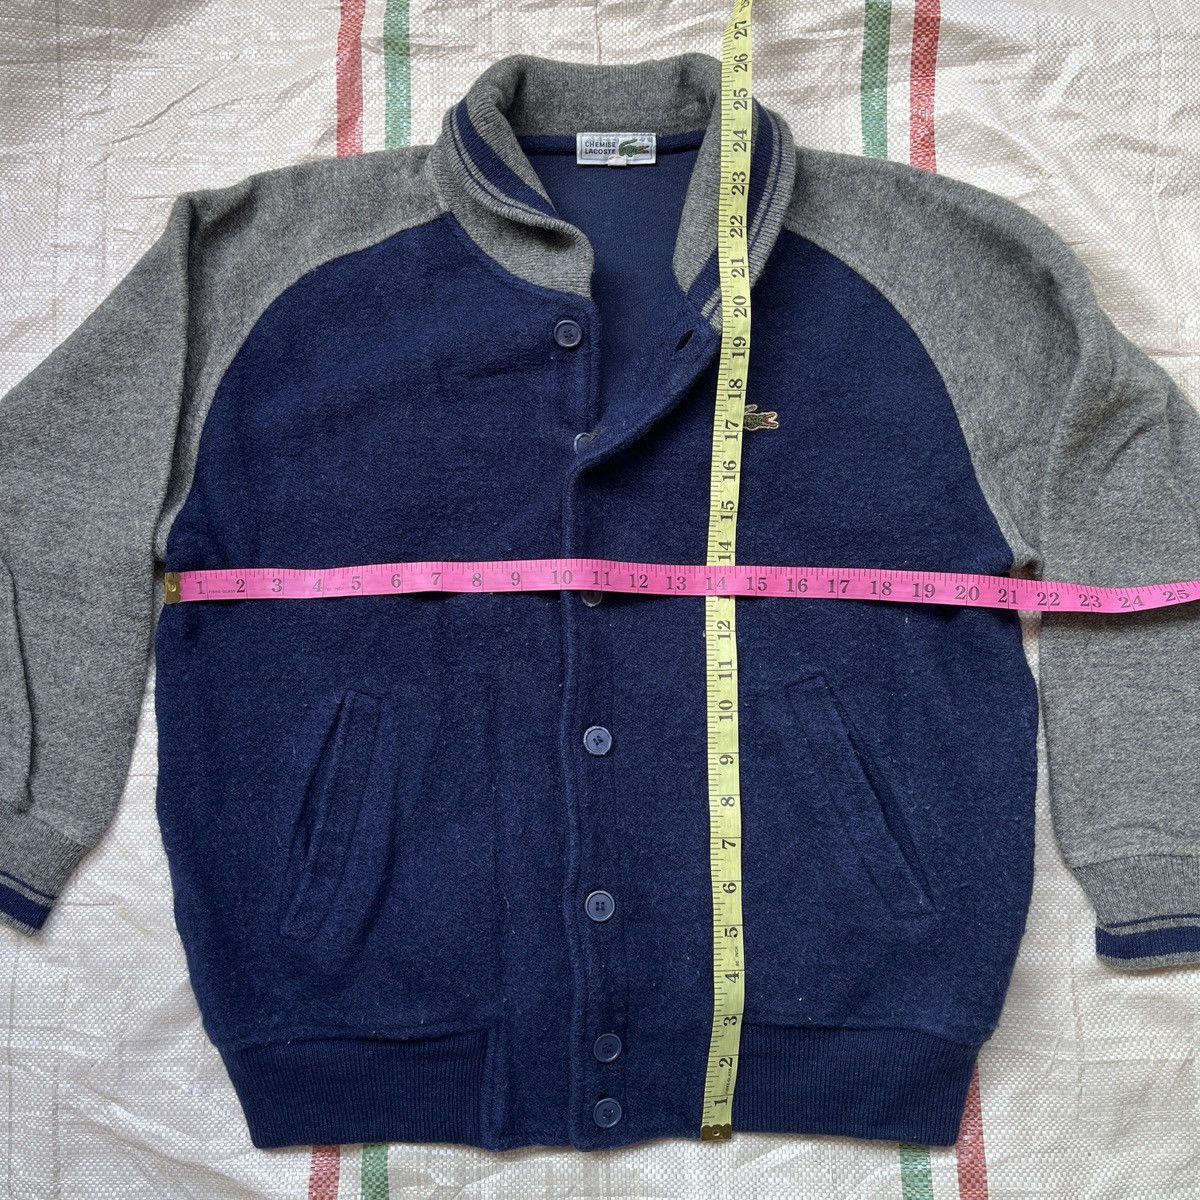 Bomber Style Jacket Lacoste Vintage 80s Sweater Japan - 4